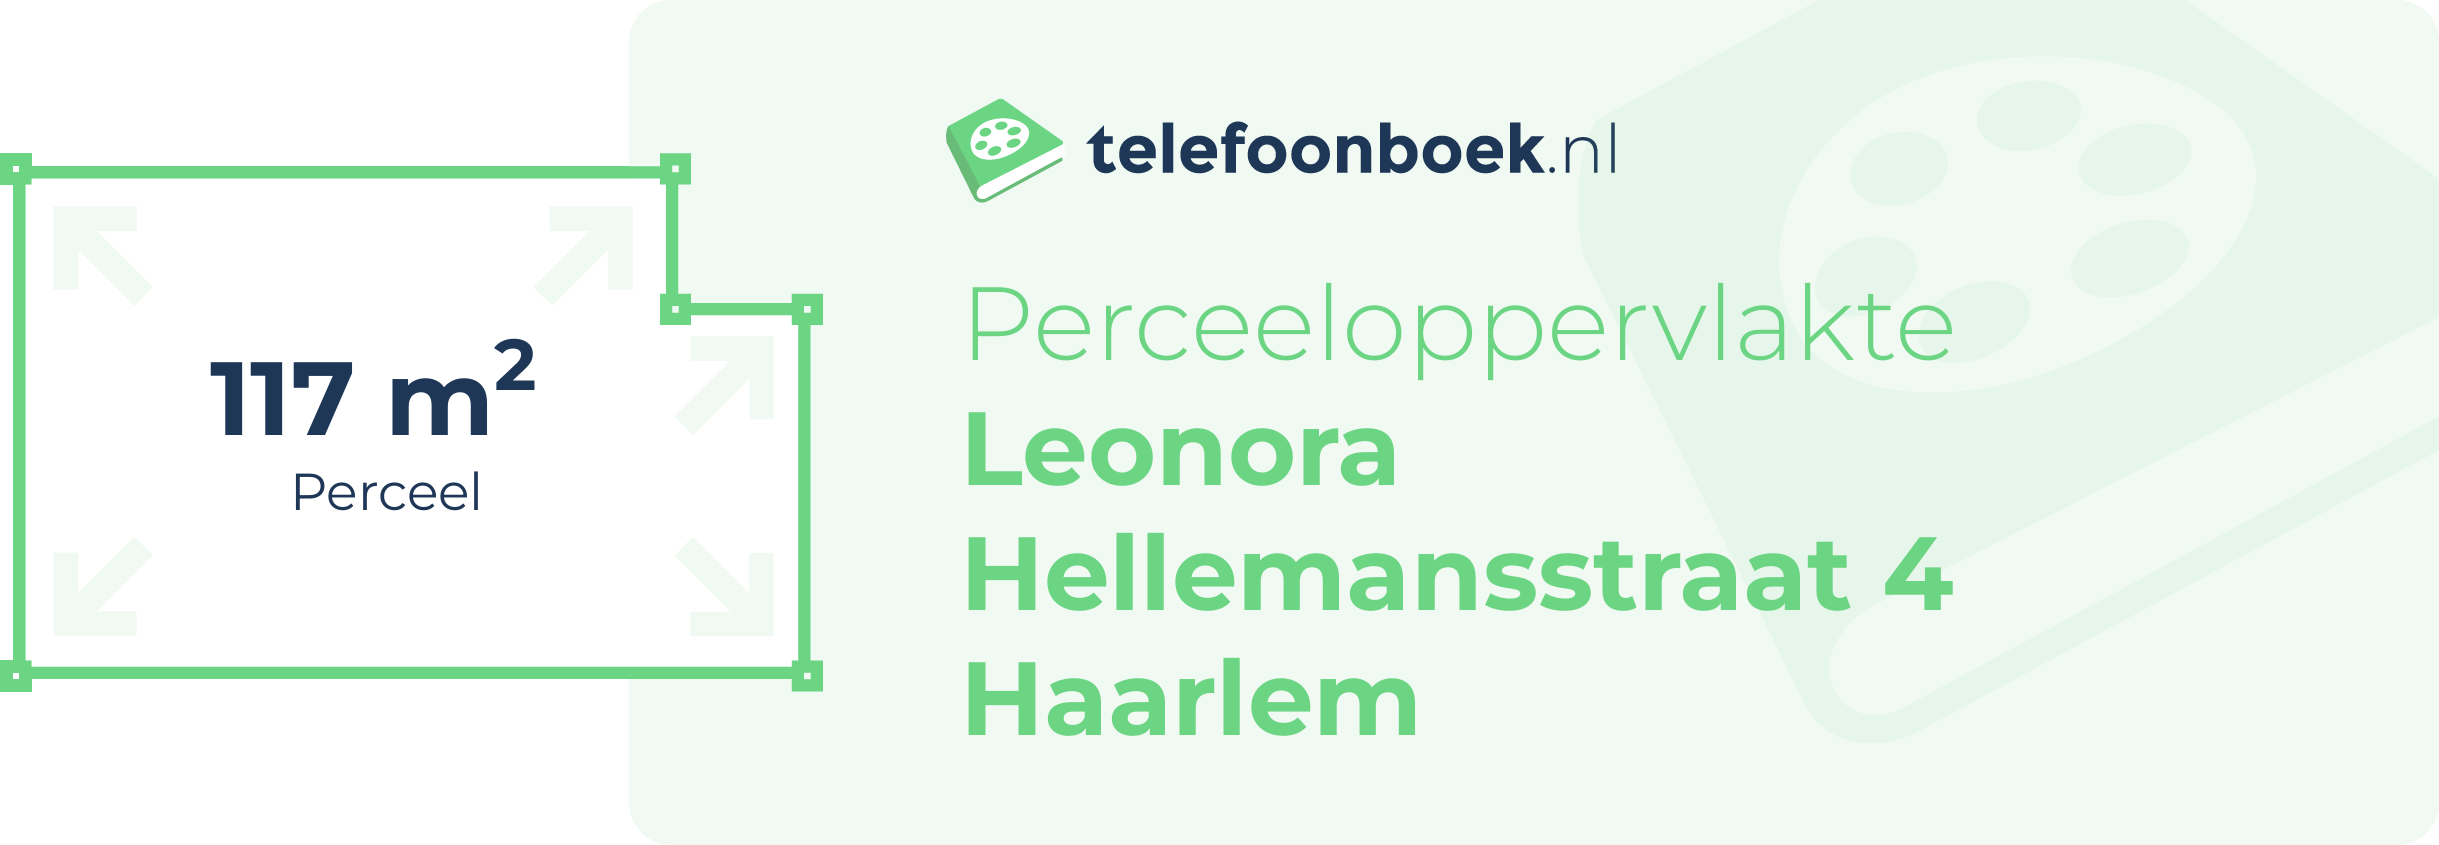 Perceeloppervlakte Leonora Hellemansstraat 4 Haarlem